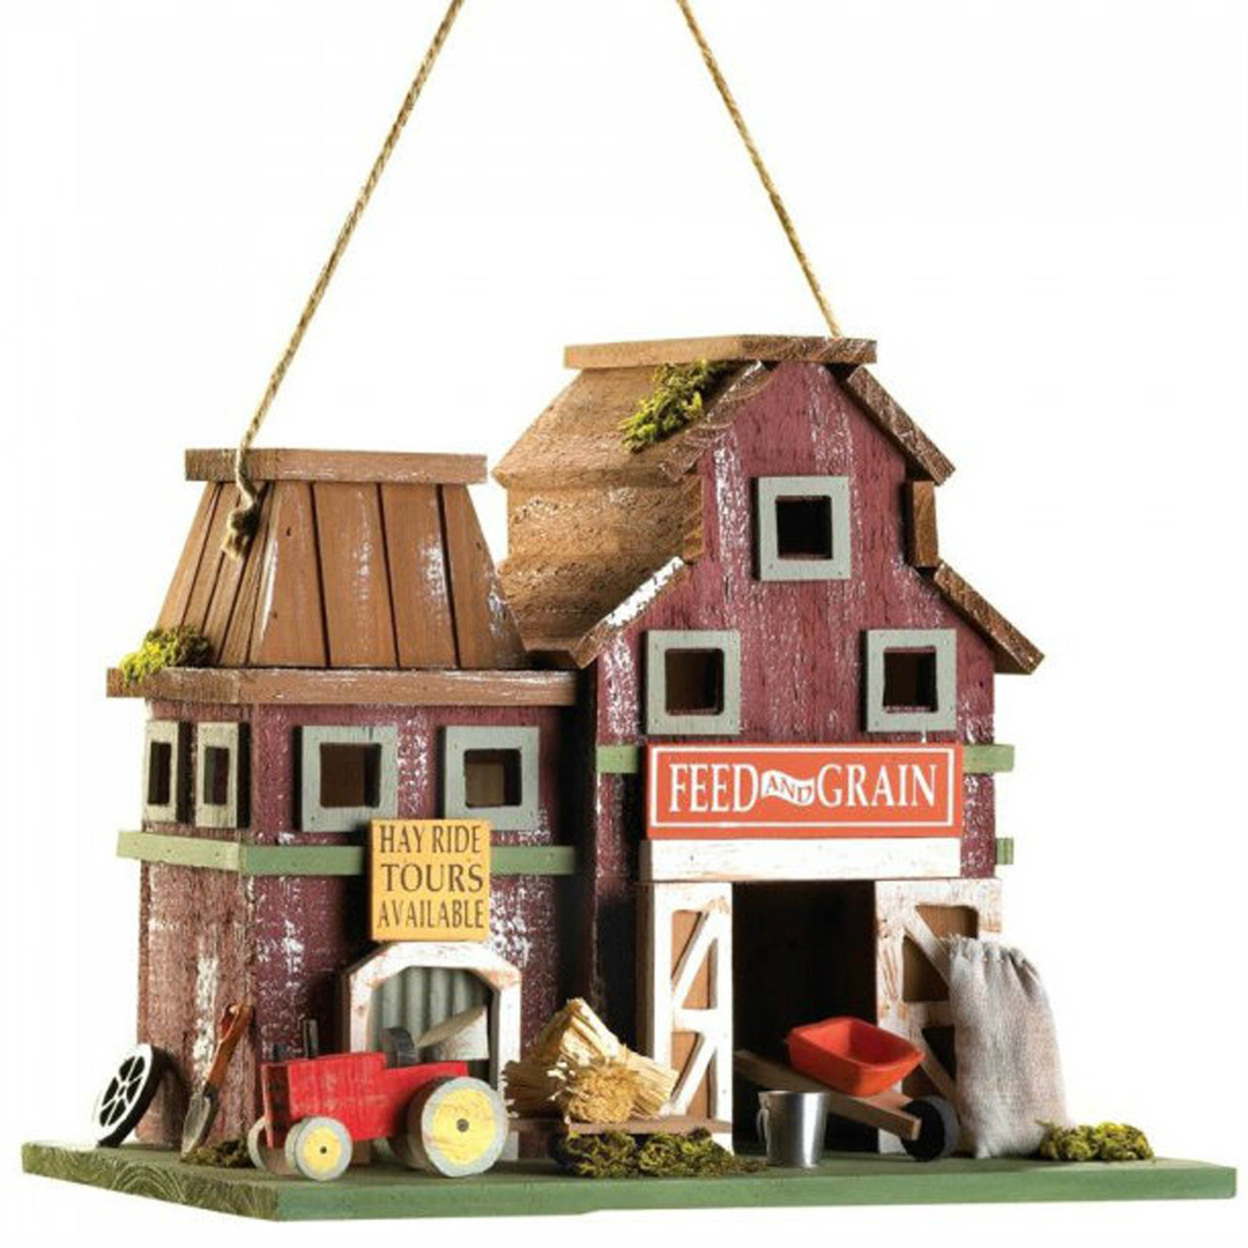 Home Decorative Feed And Grain Farmhouse Bird House - image 1 of 3